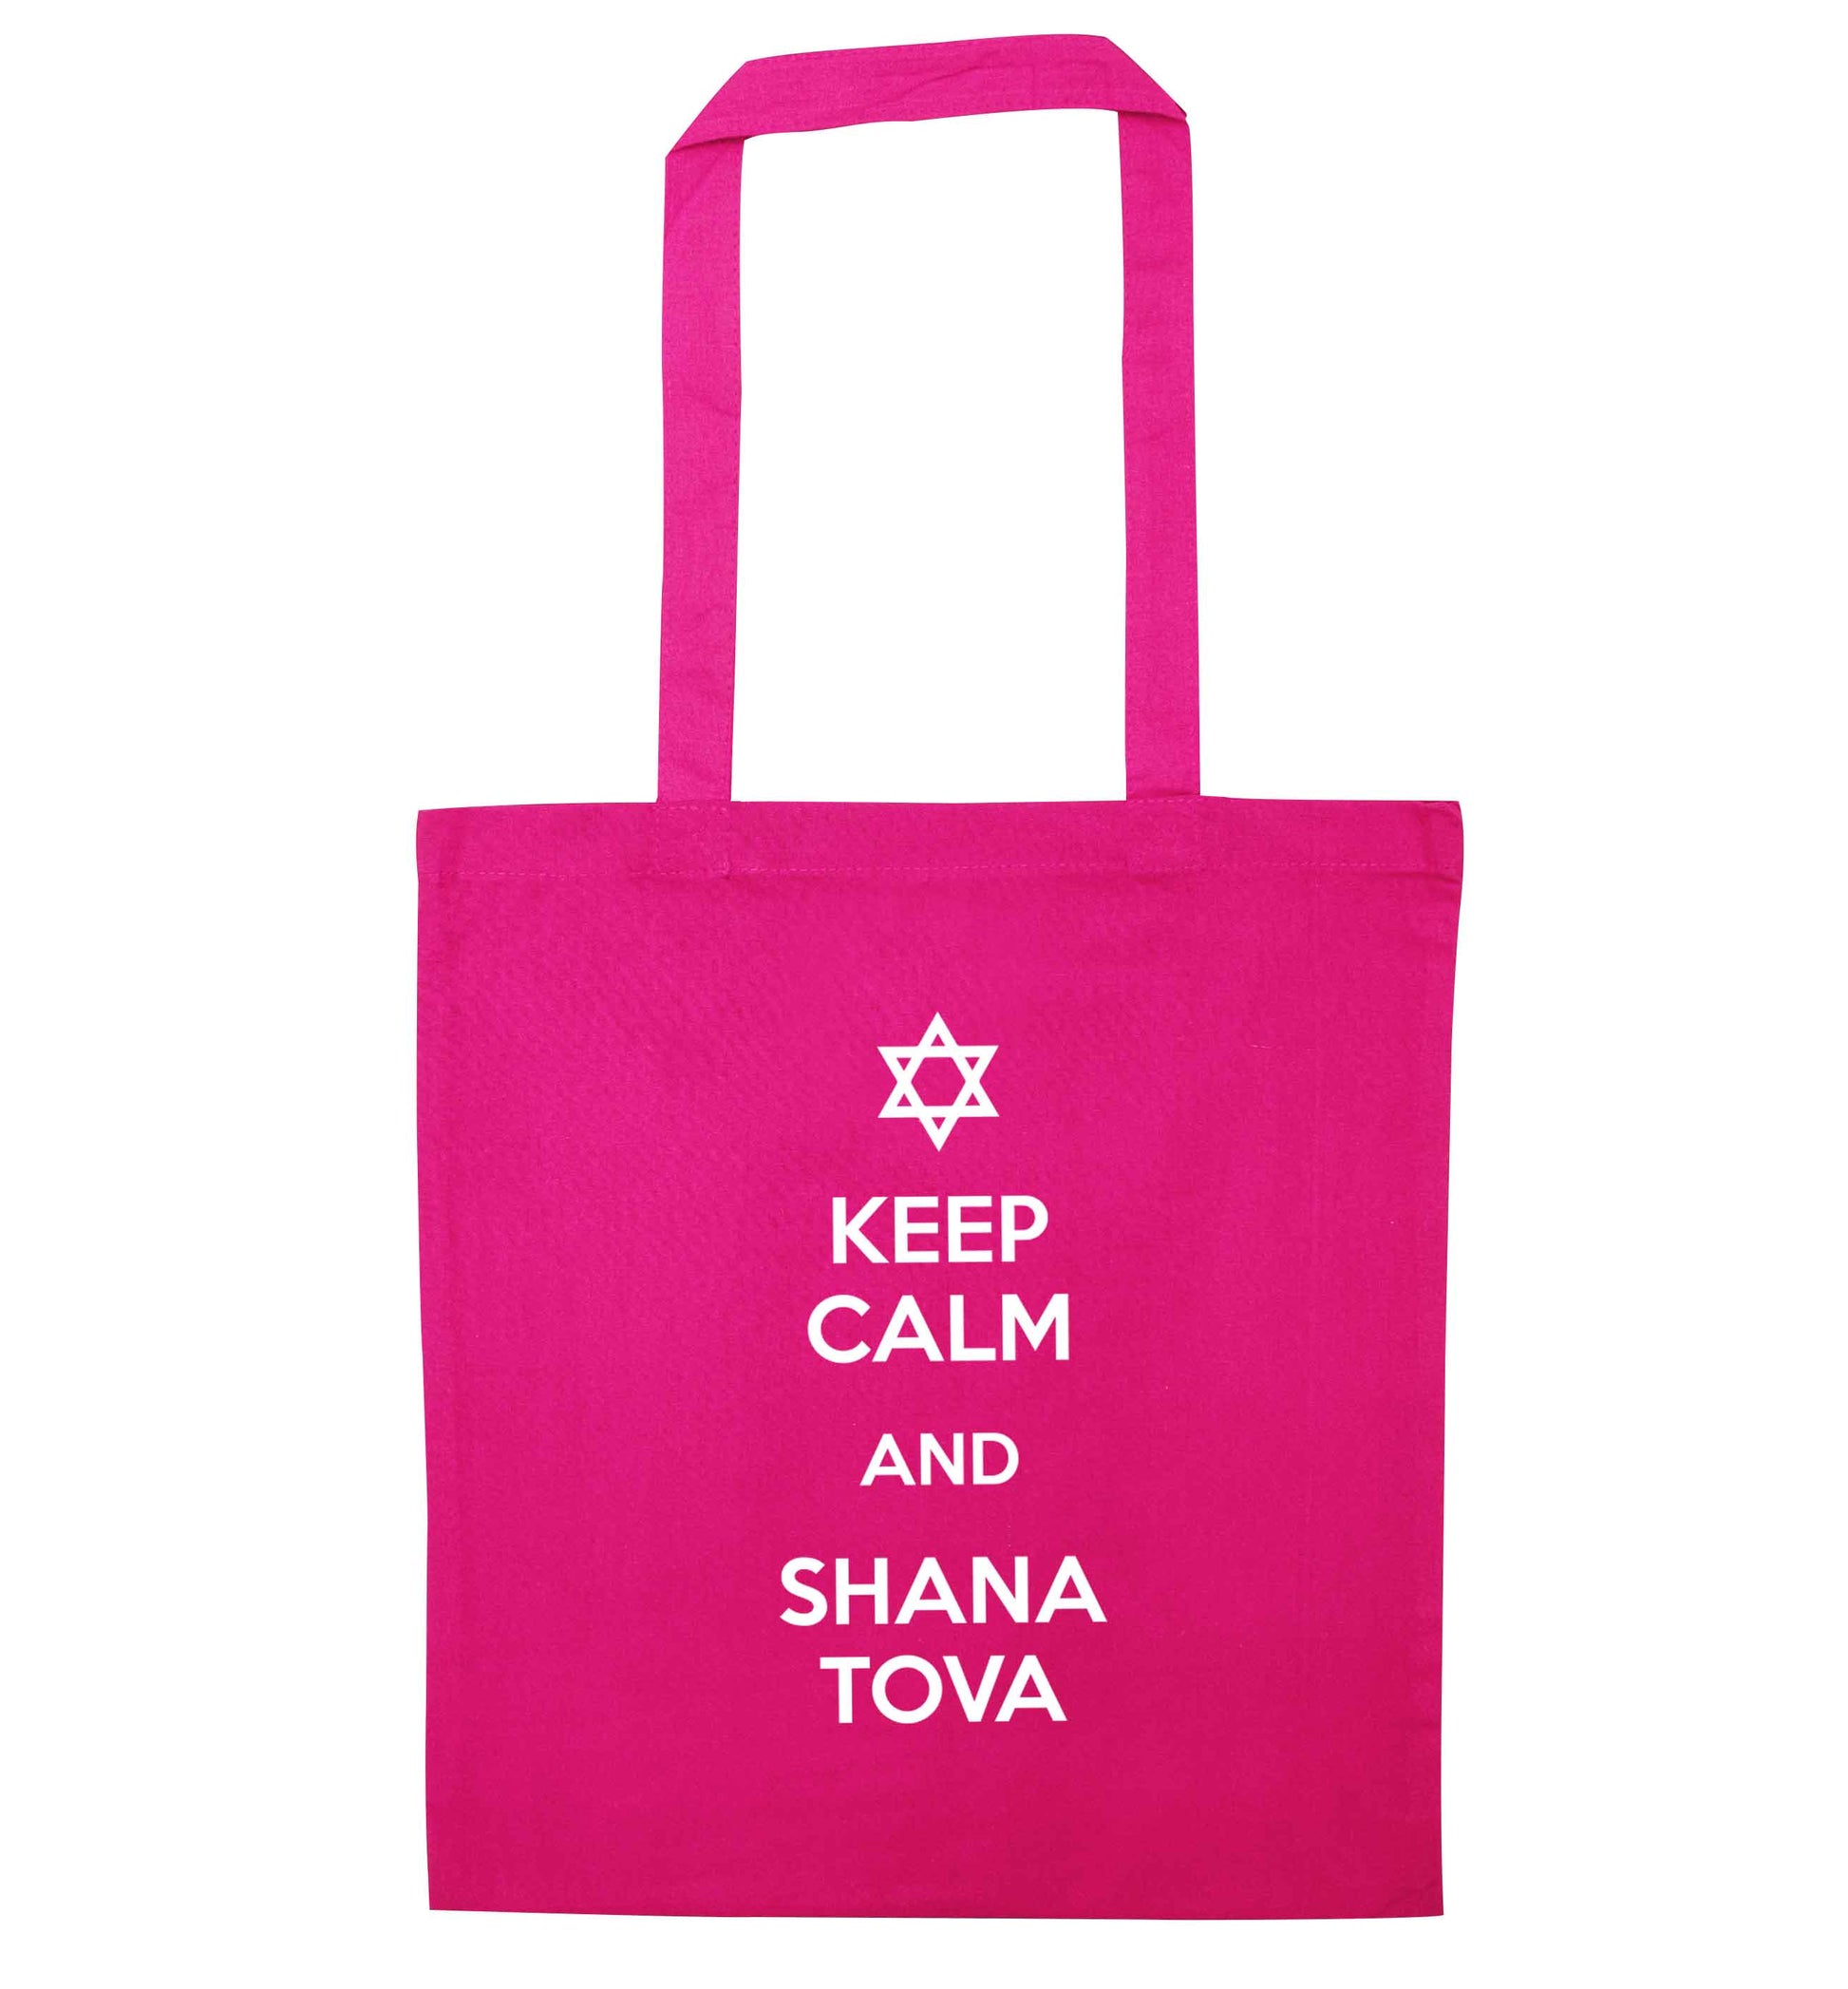 Keep calm and shana tova pink tote bag